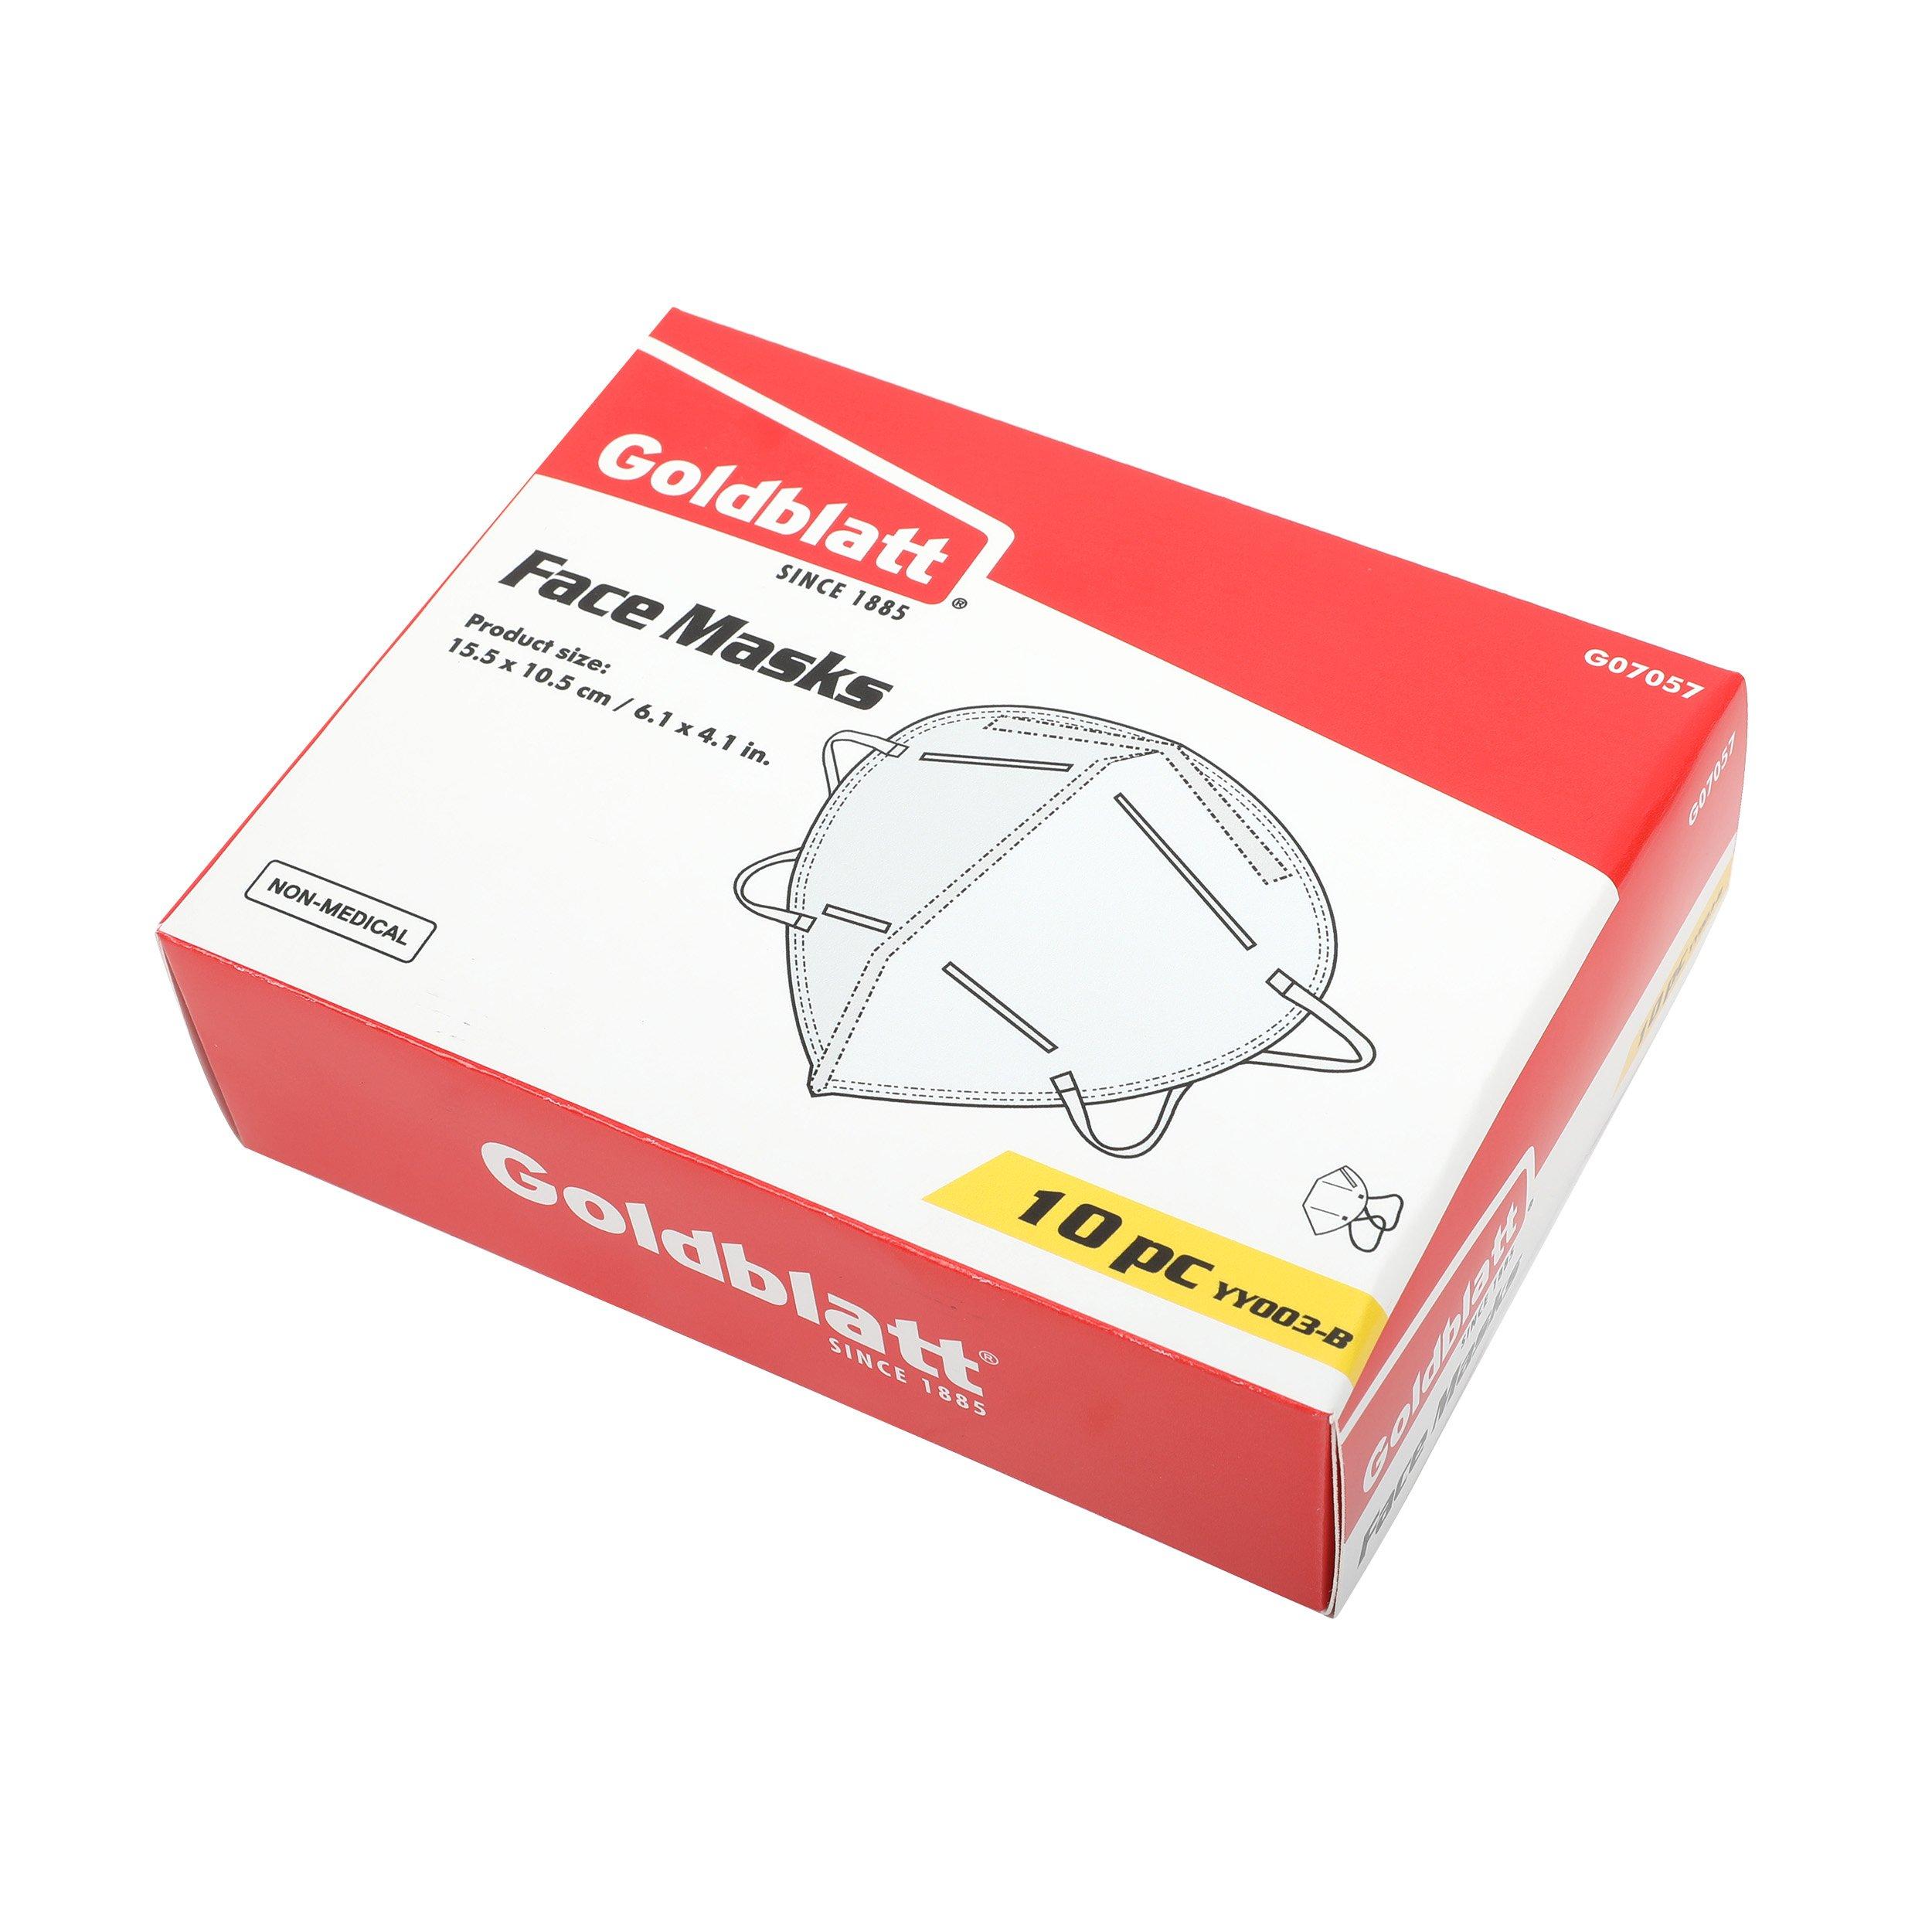 Goldblatt Respirator Mask 10 Pack